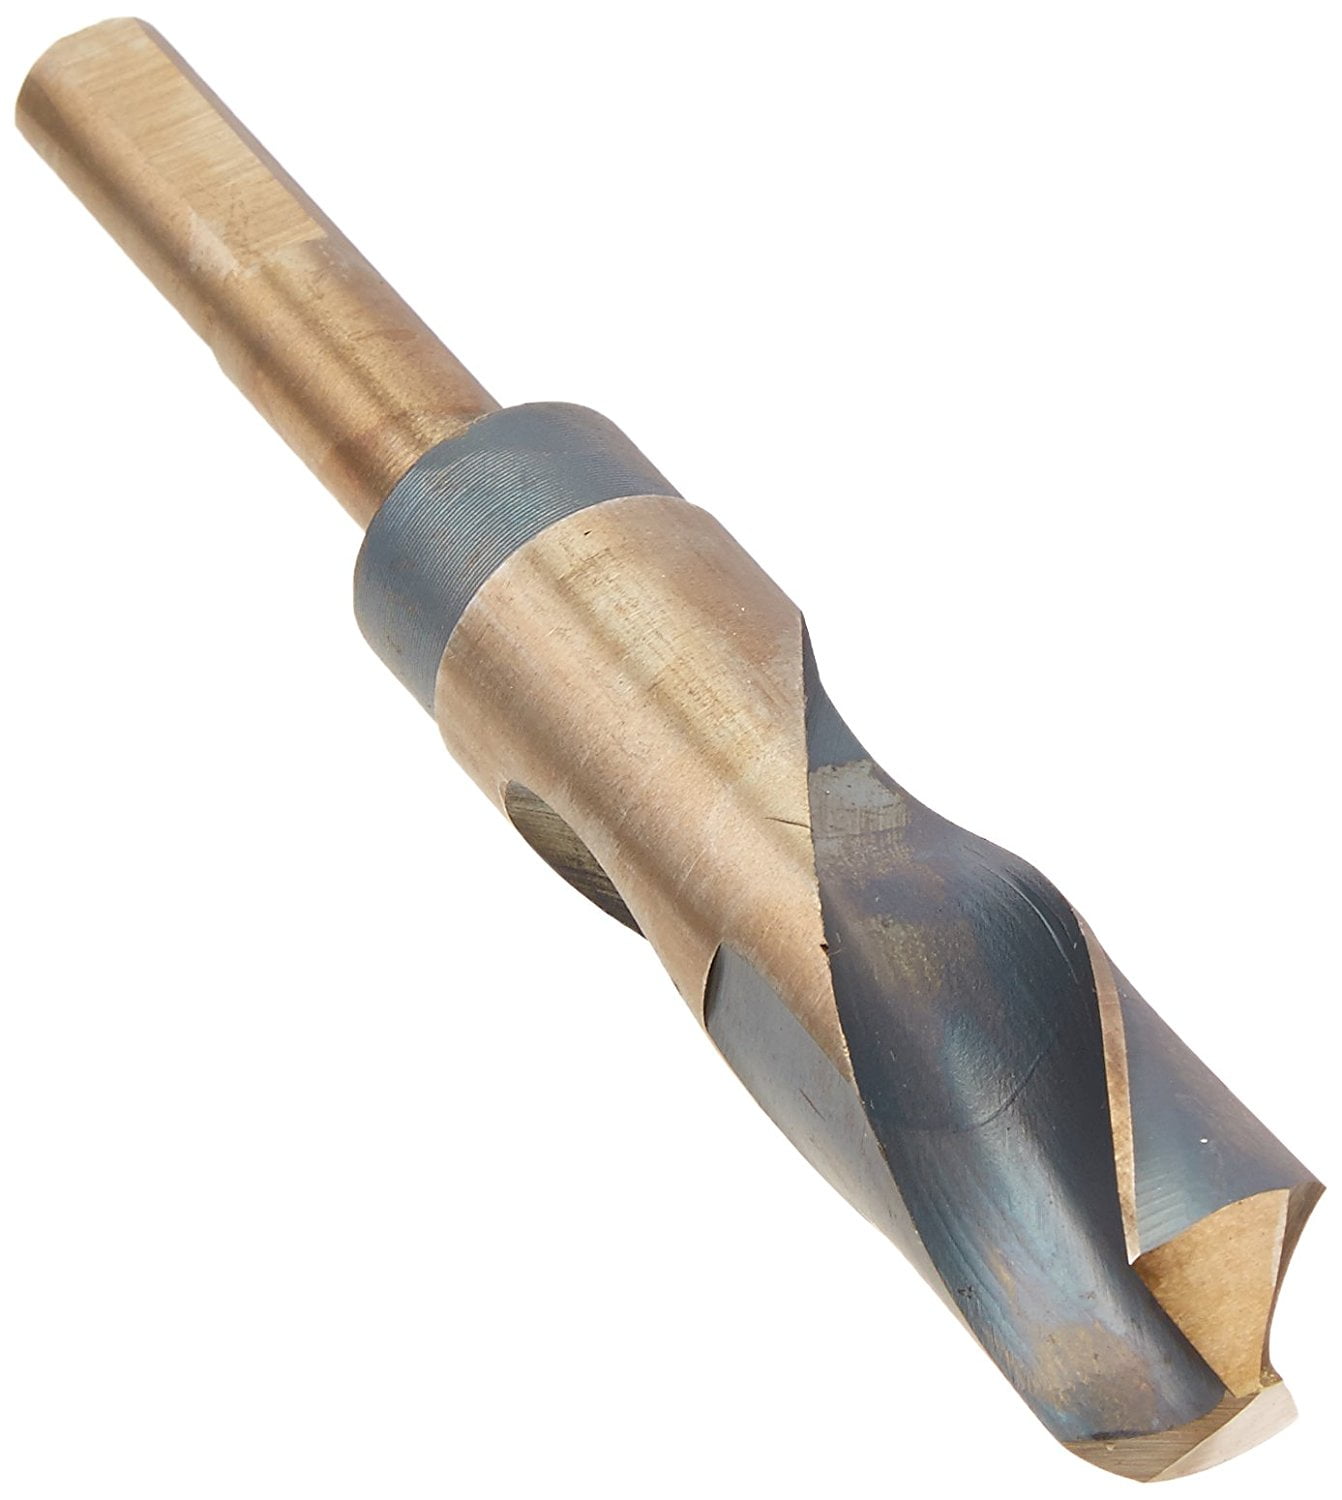 Neiko Pro 10238B SIlver and Deming Industrial Drill Bit 1/2 Shank with 1 Diameter Ridgerock Tools Inc. 